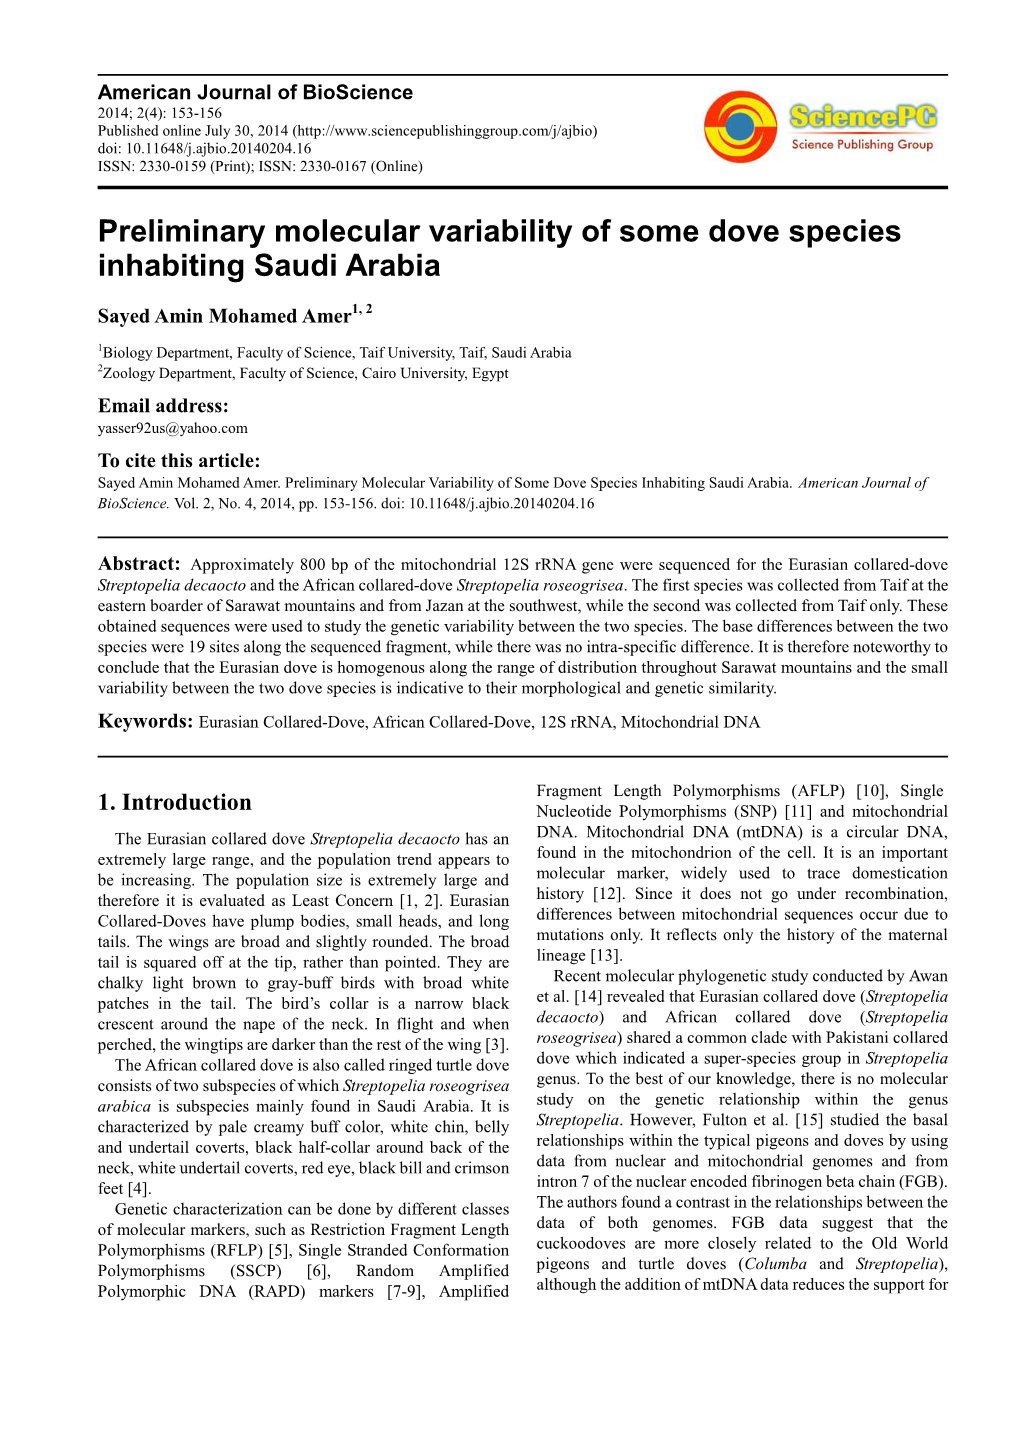 Preliminary Molecular Variability of Some Dove Species Inhabiting Saudi Arabia